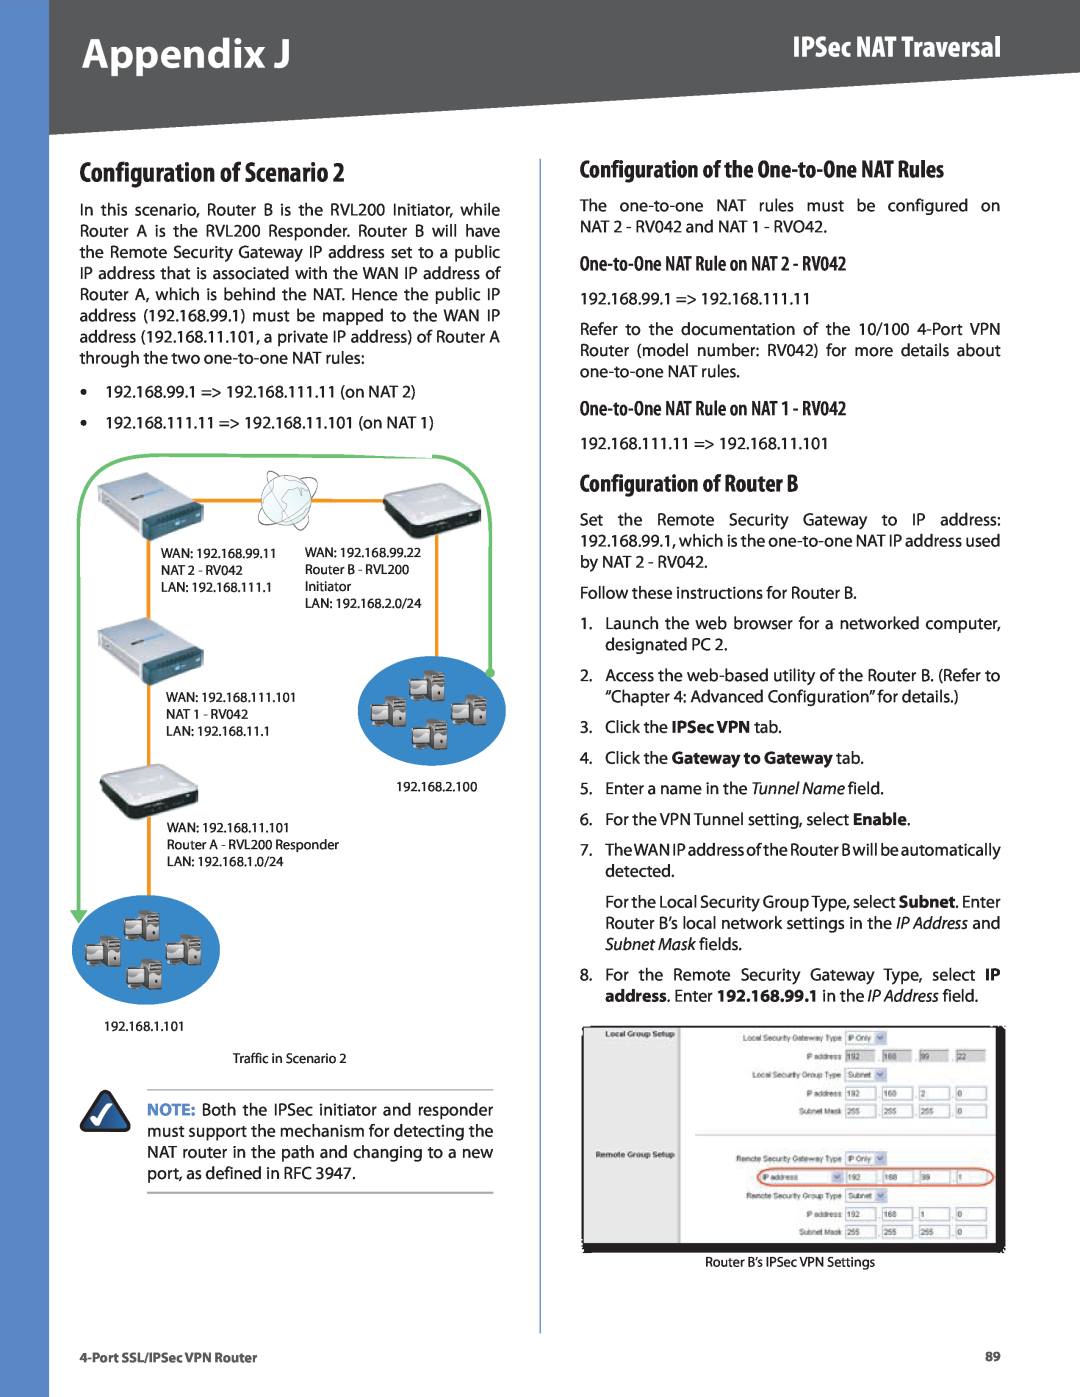 Cisco Systems RVL200 manual Configuration of the One-to-One NAT Rules, One-to-One NAT Rule on NAT 2 - RV042, Appendix J 